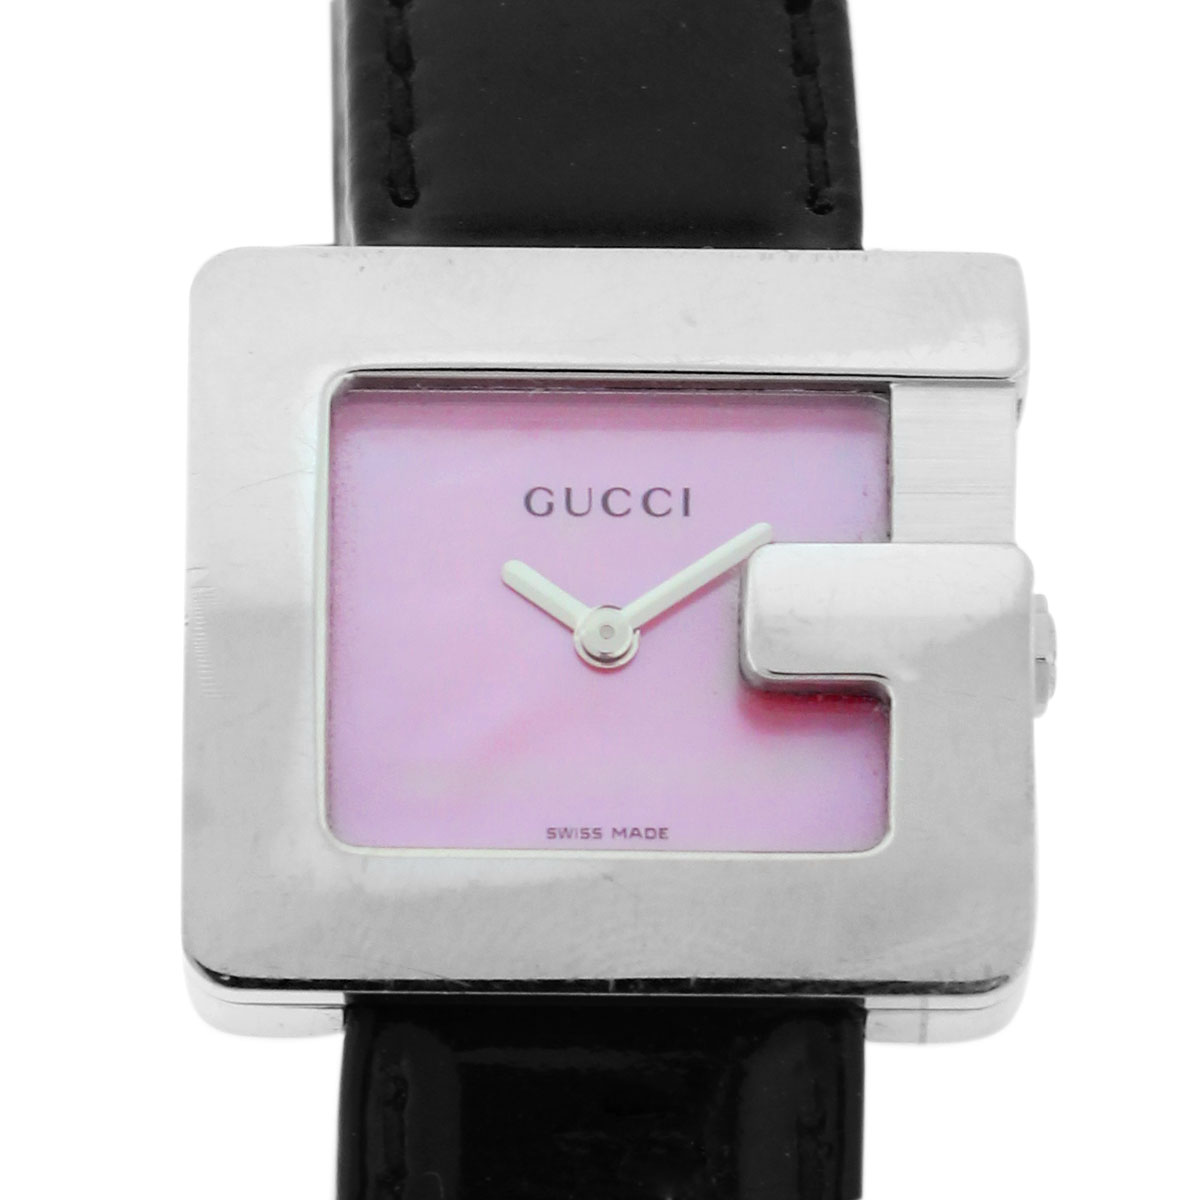 gucci white gold watch